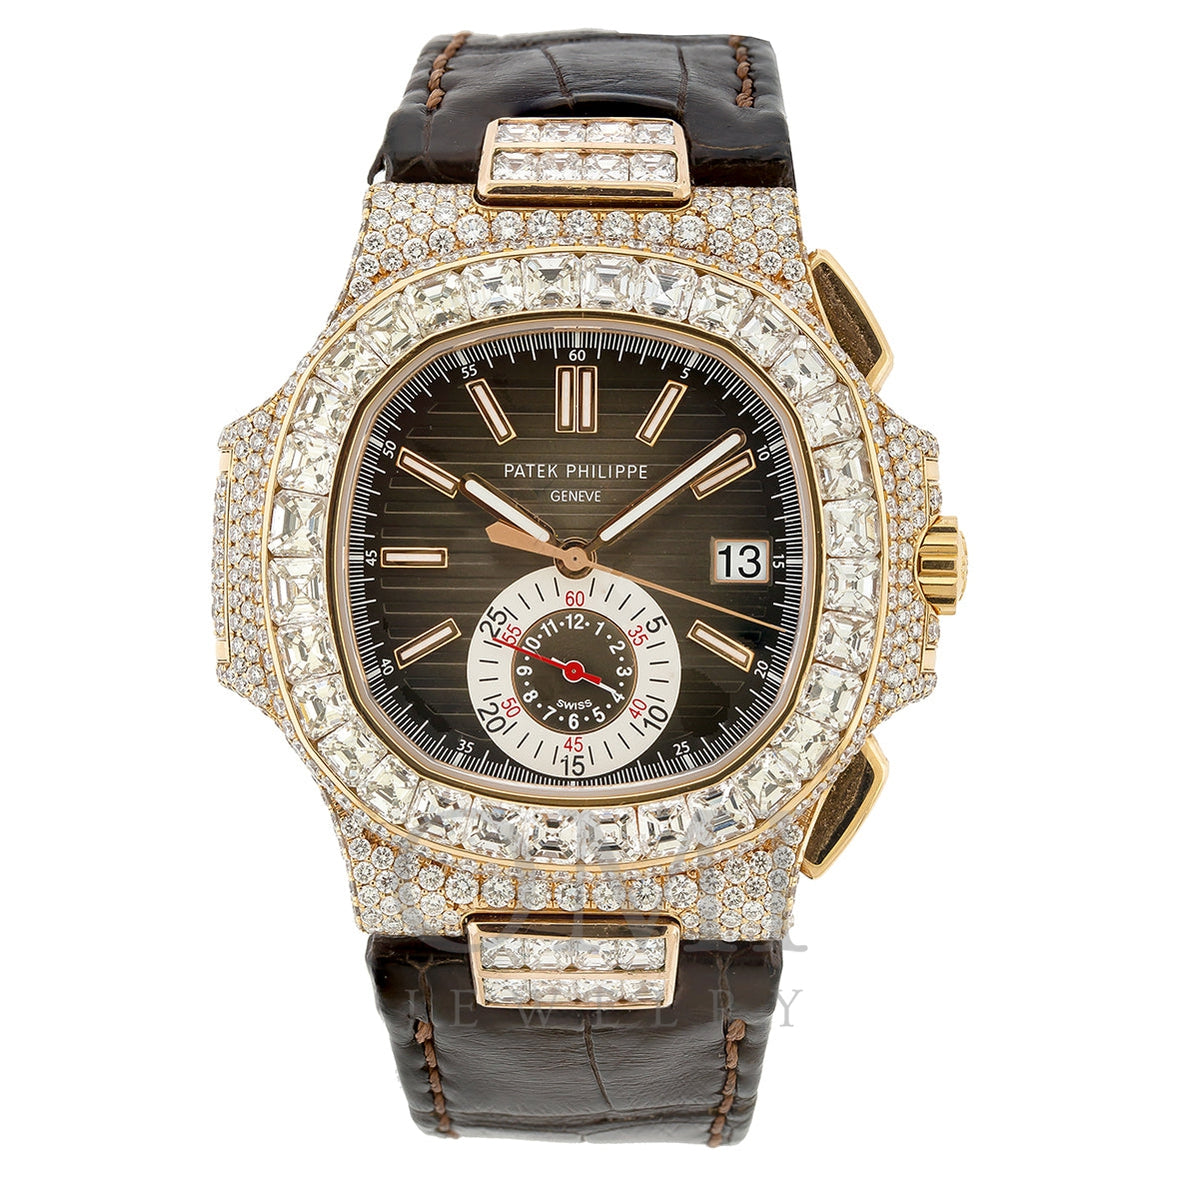 Patek Philippe Nautilus Custom Diamonds Men's Watch 5980/1A-019- Price Request Only